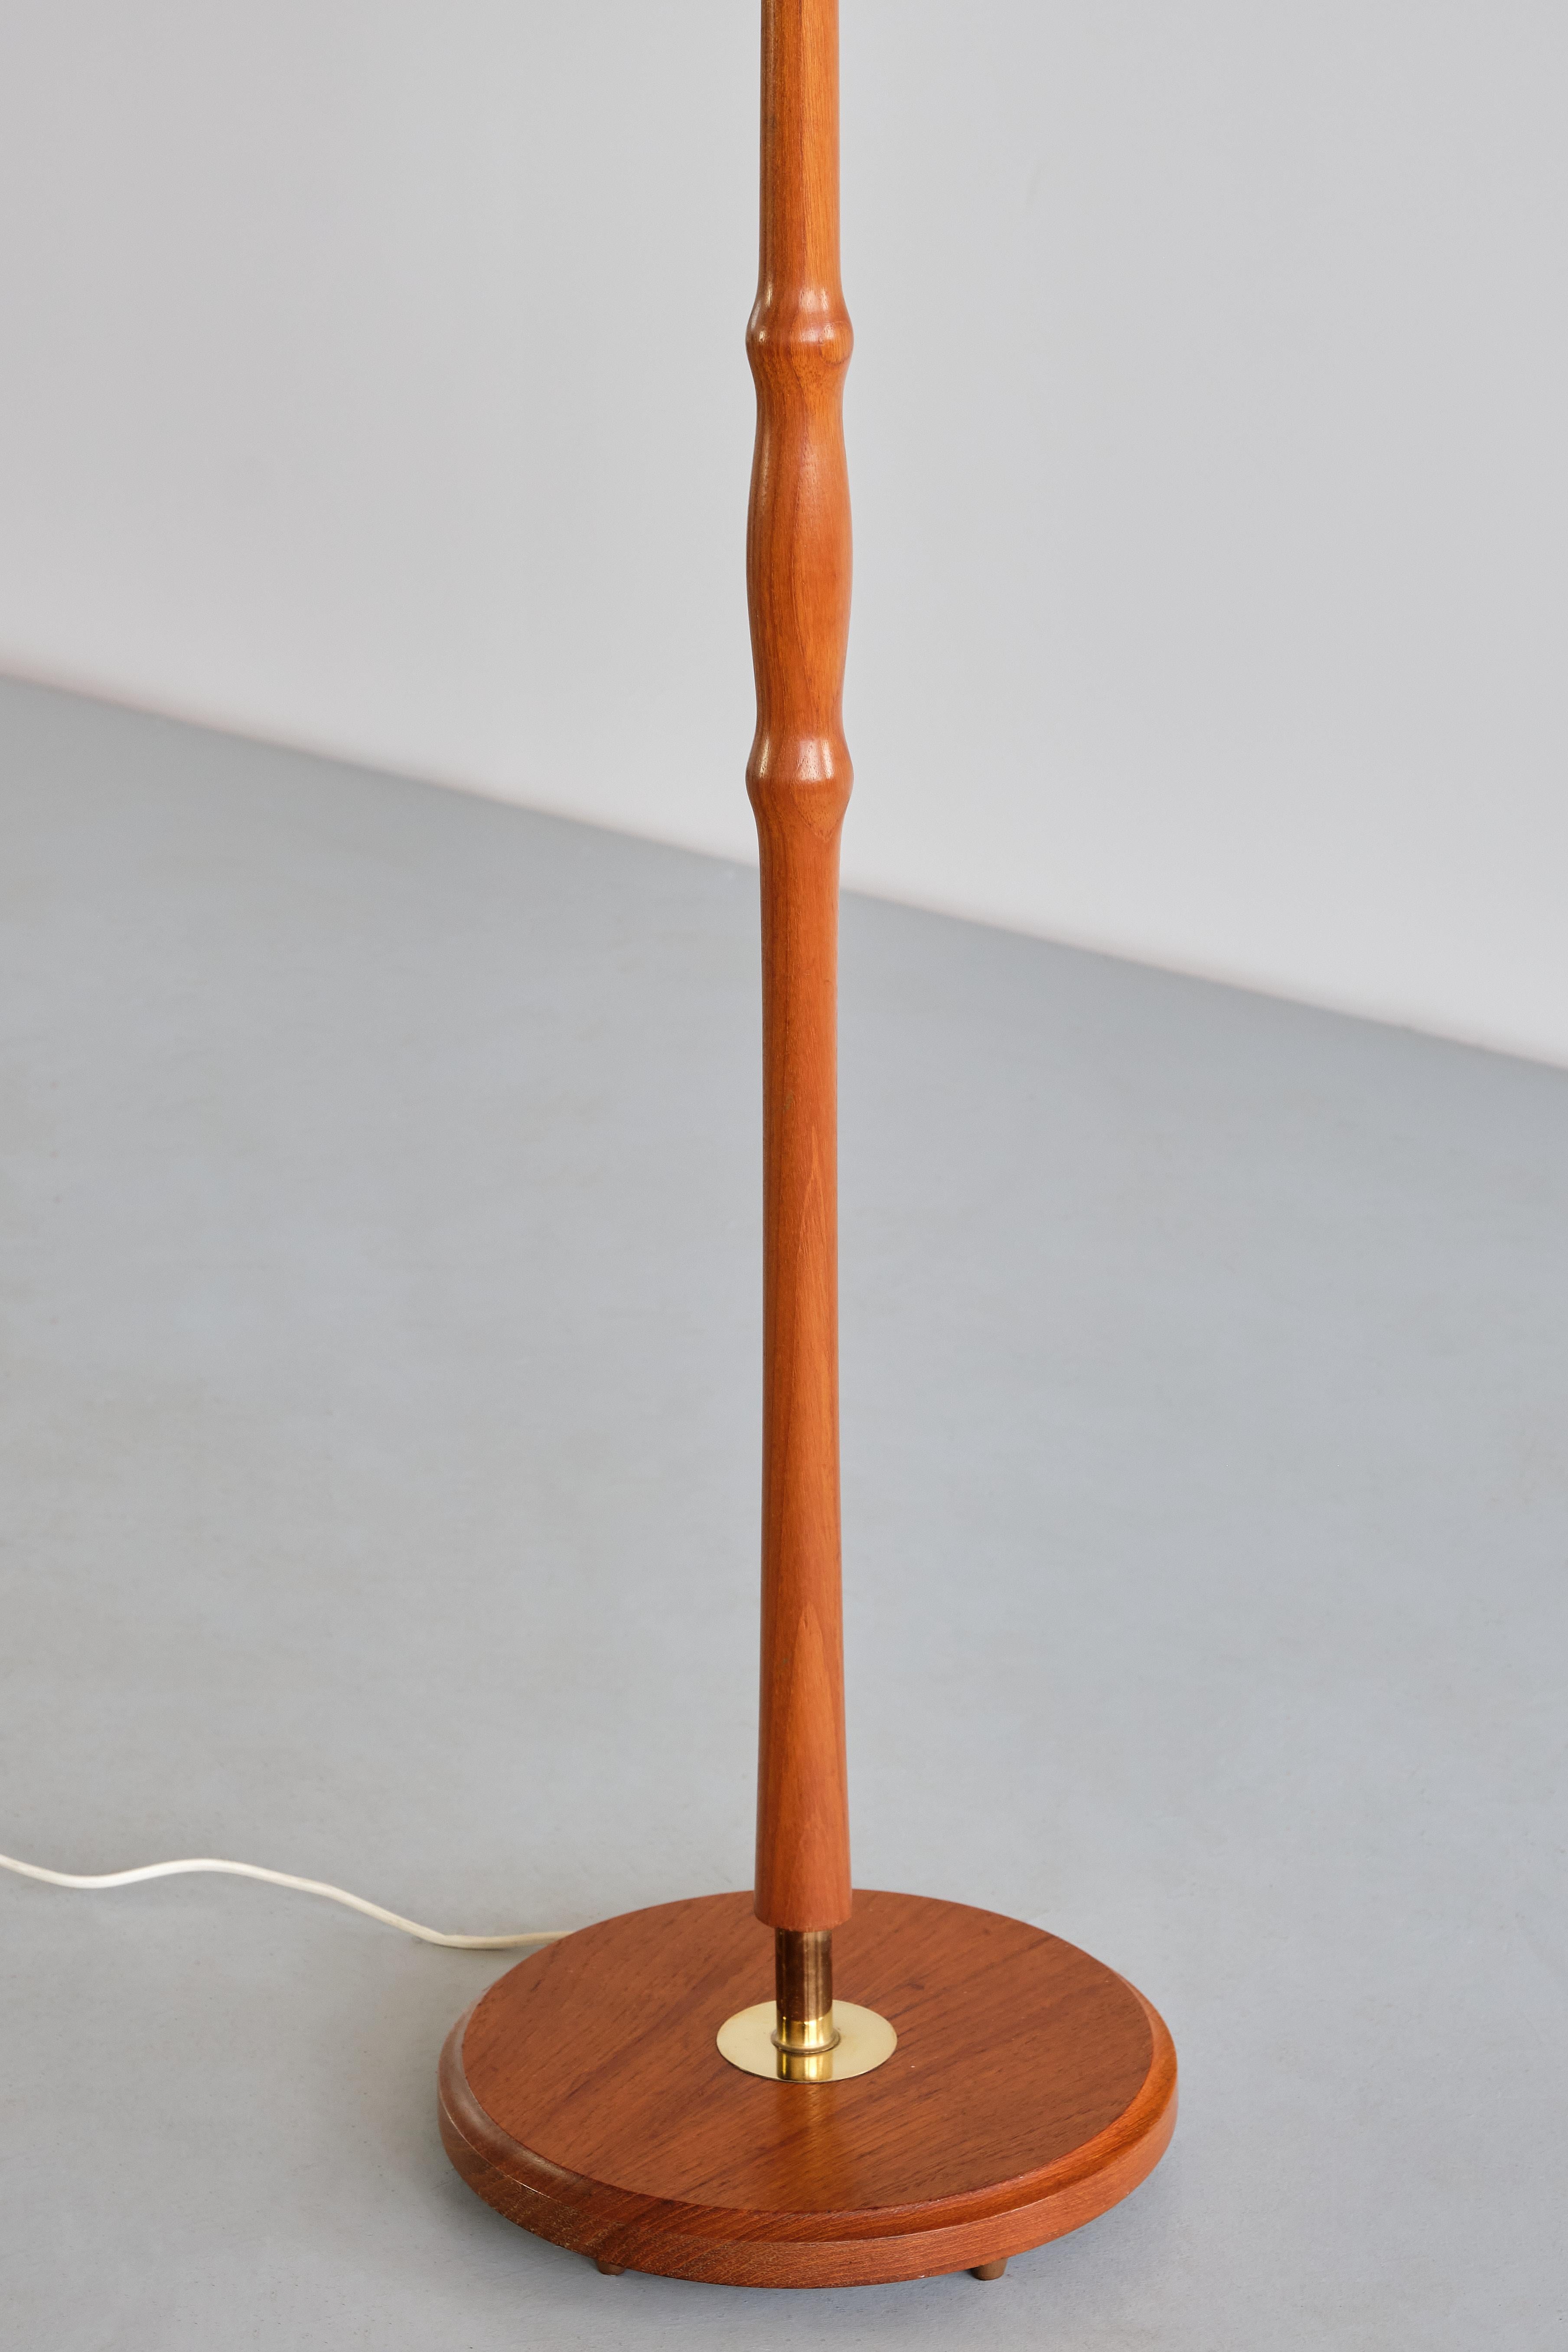 Mid-20th Century Örsjö Armatur Teak and Brass Floor Lamp with Josef Frank Shade, Sweden, 1950s For Sale